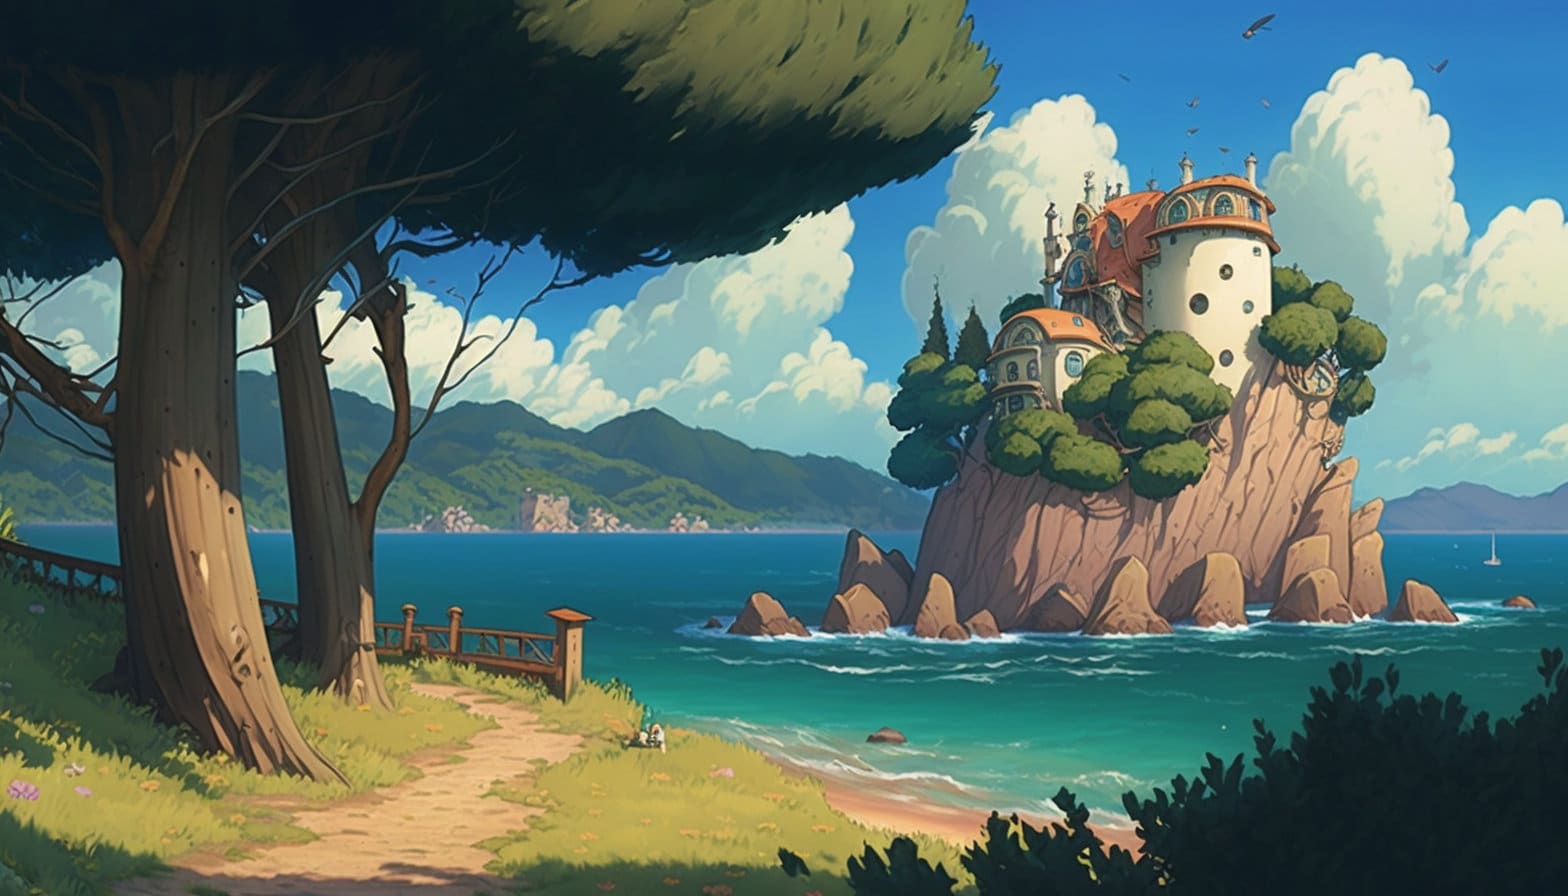 Studio Ghibli Style Landscape Wallpaper Image Landscape